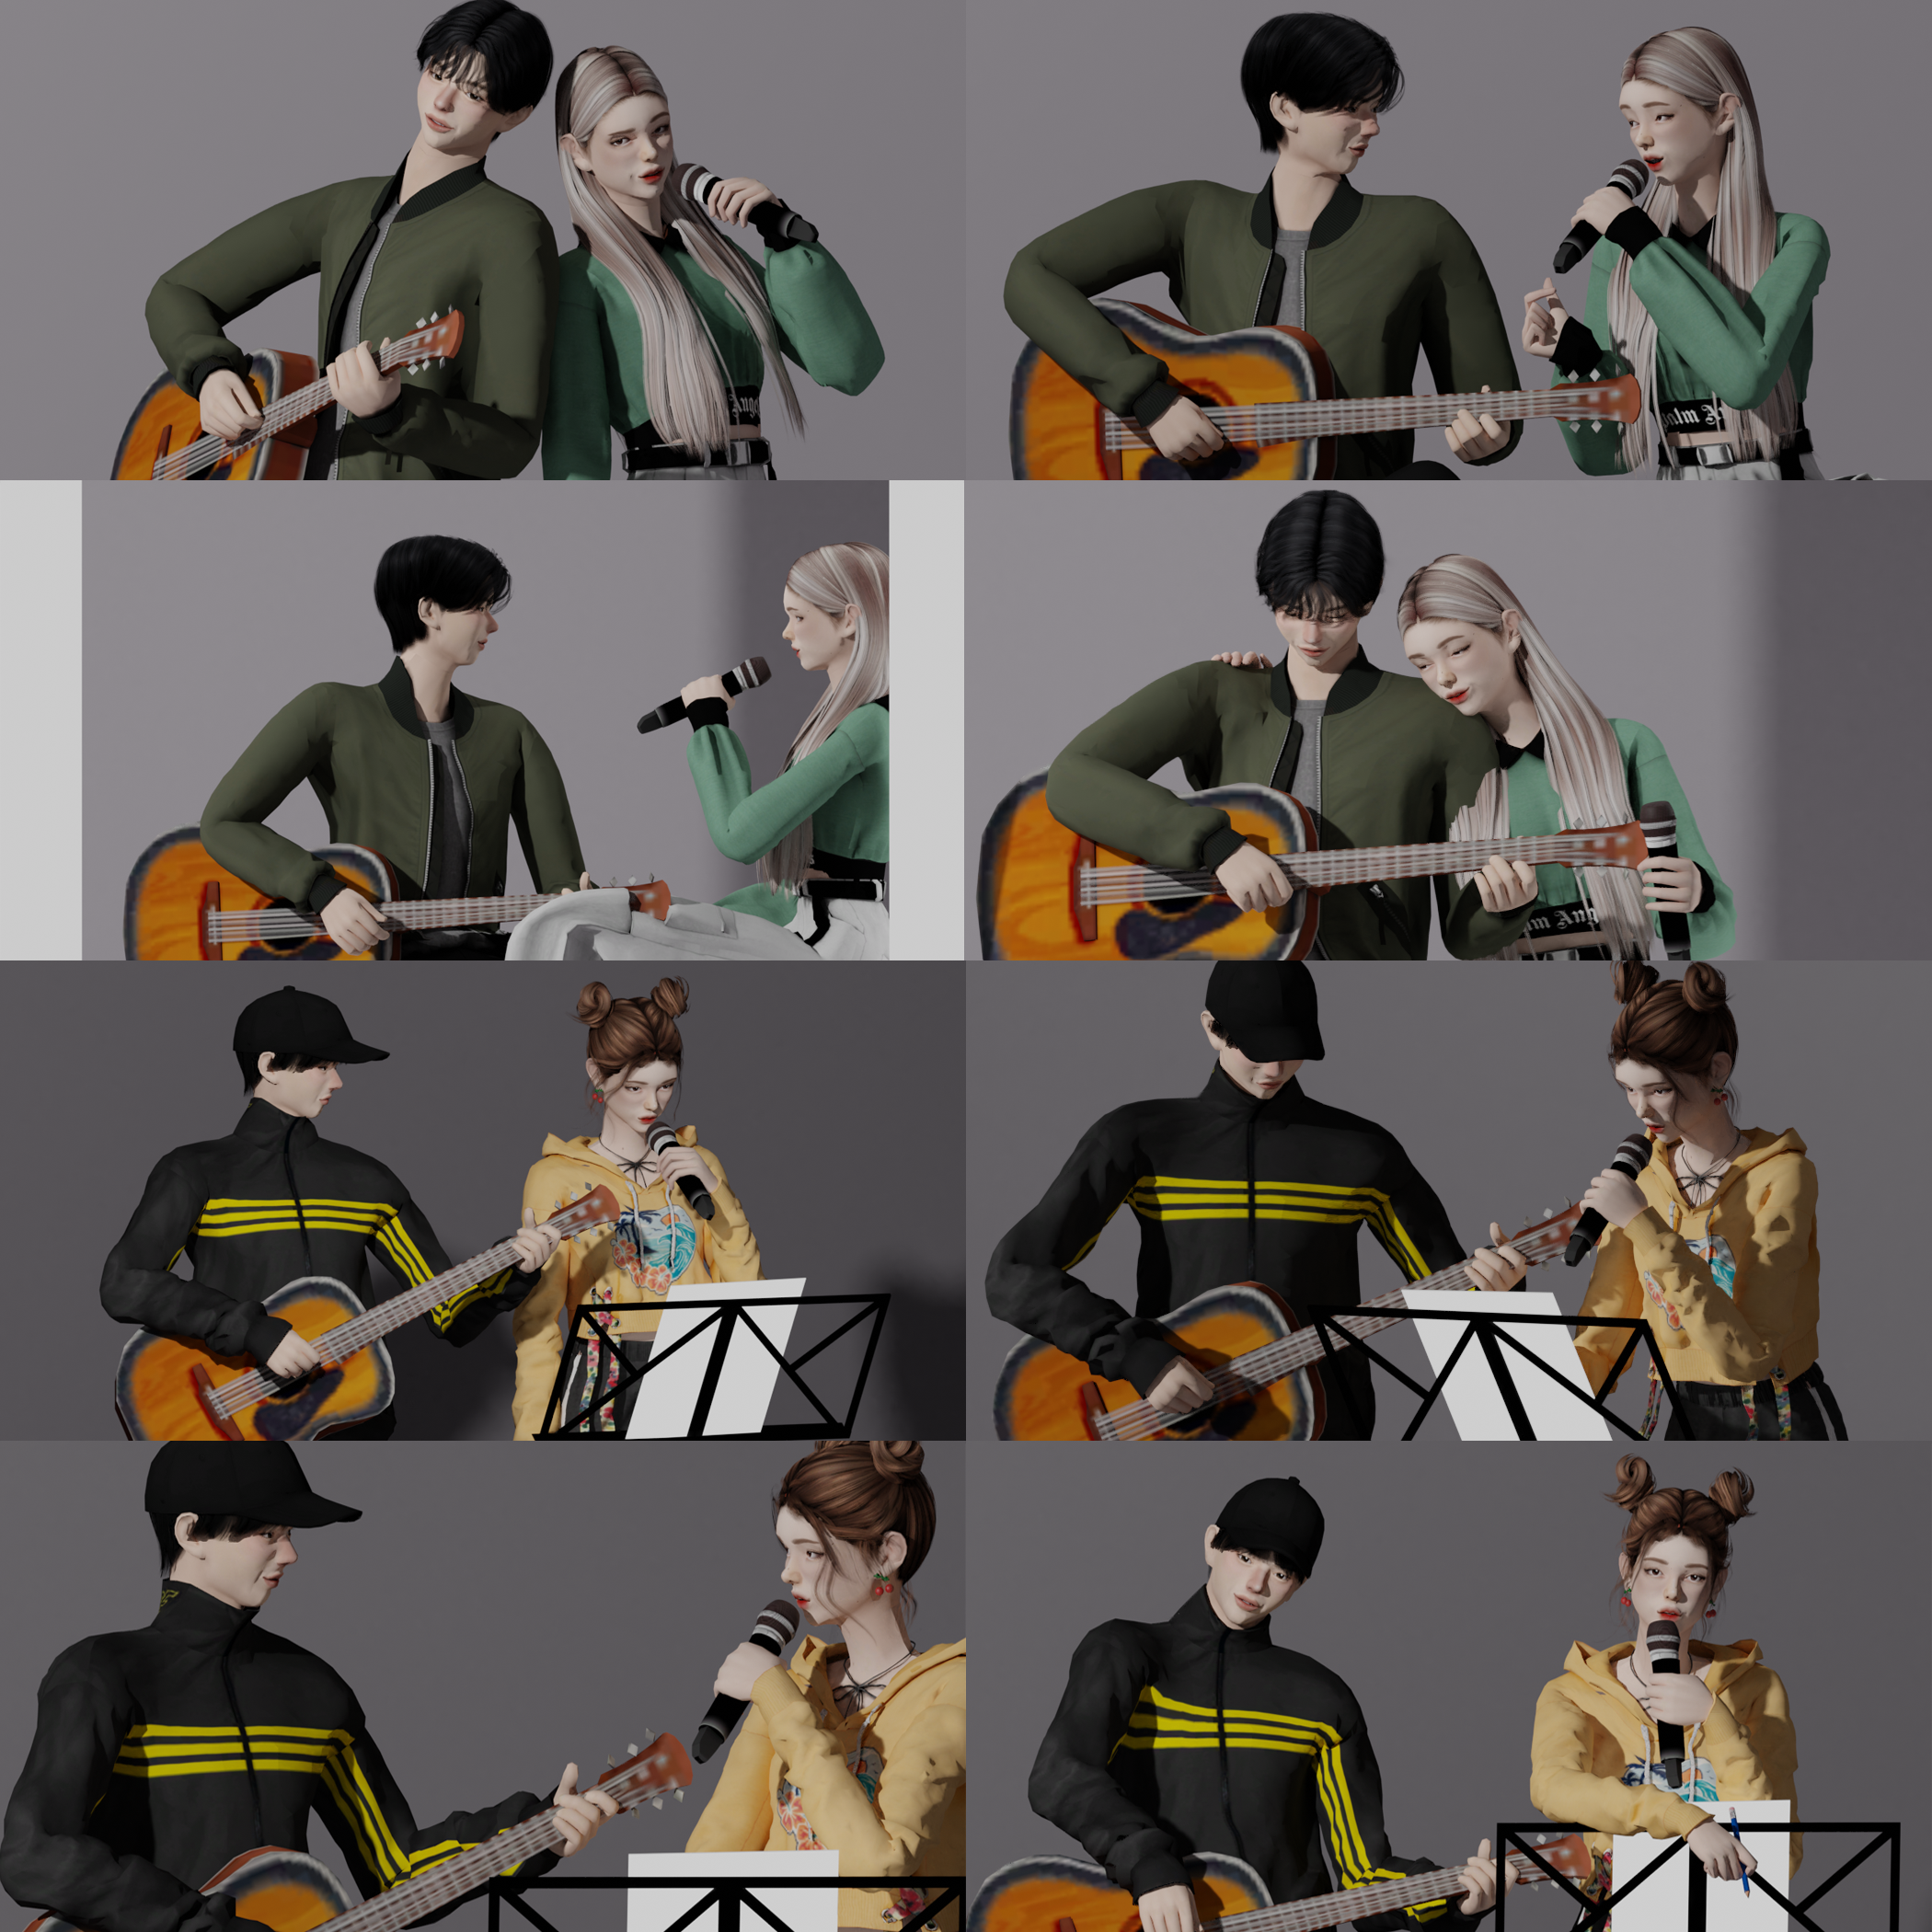 Full Jazz Guitar Songs - The Sims 4 - YouTube